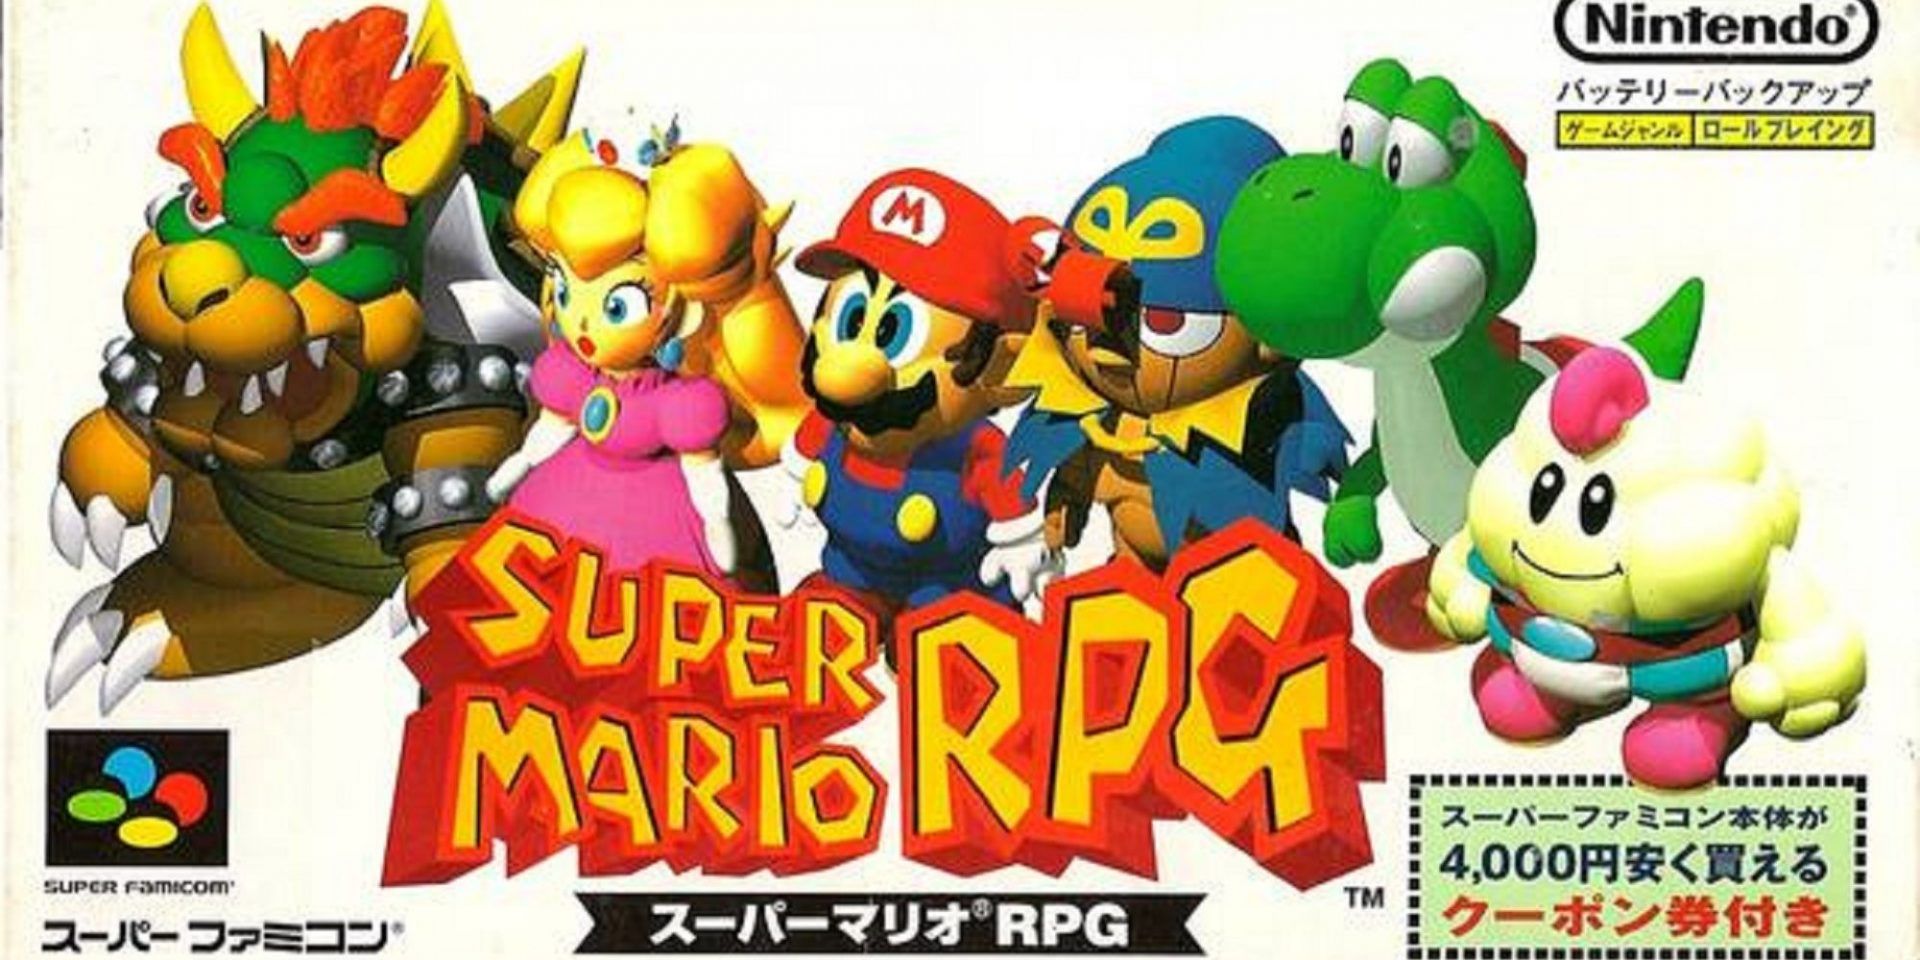 Super Mario RPG - Nintendo Switch, Nintendo Switch